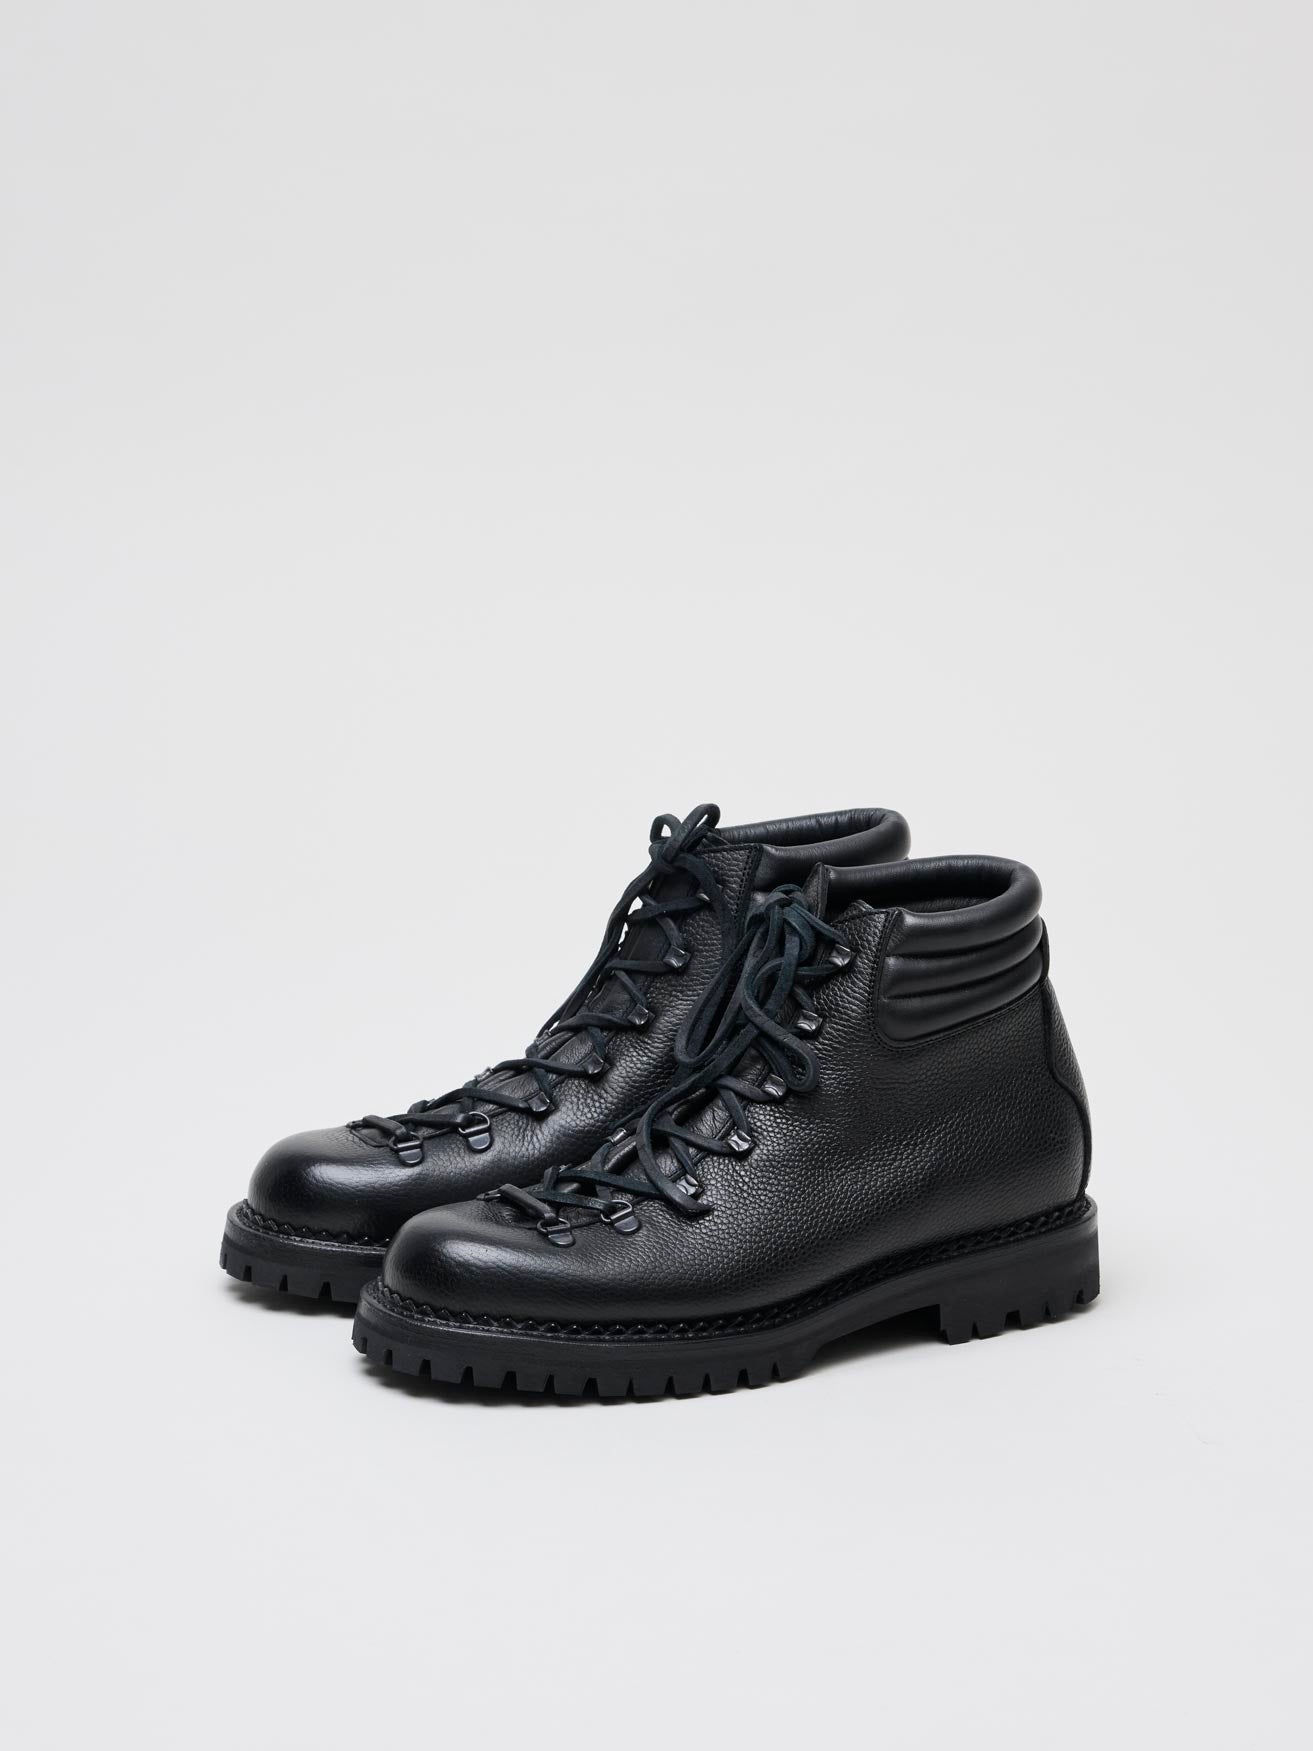 Vettore Boots, Pale Black